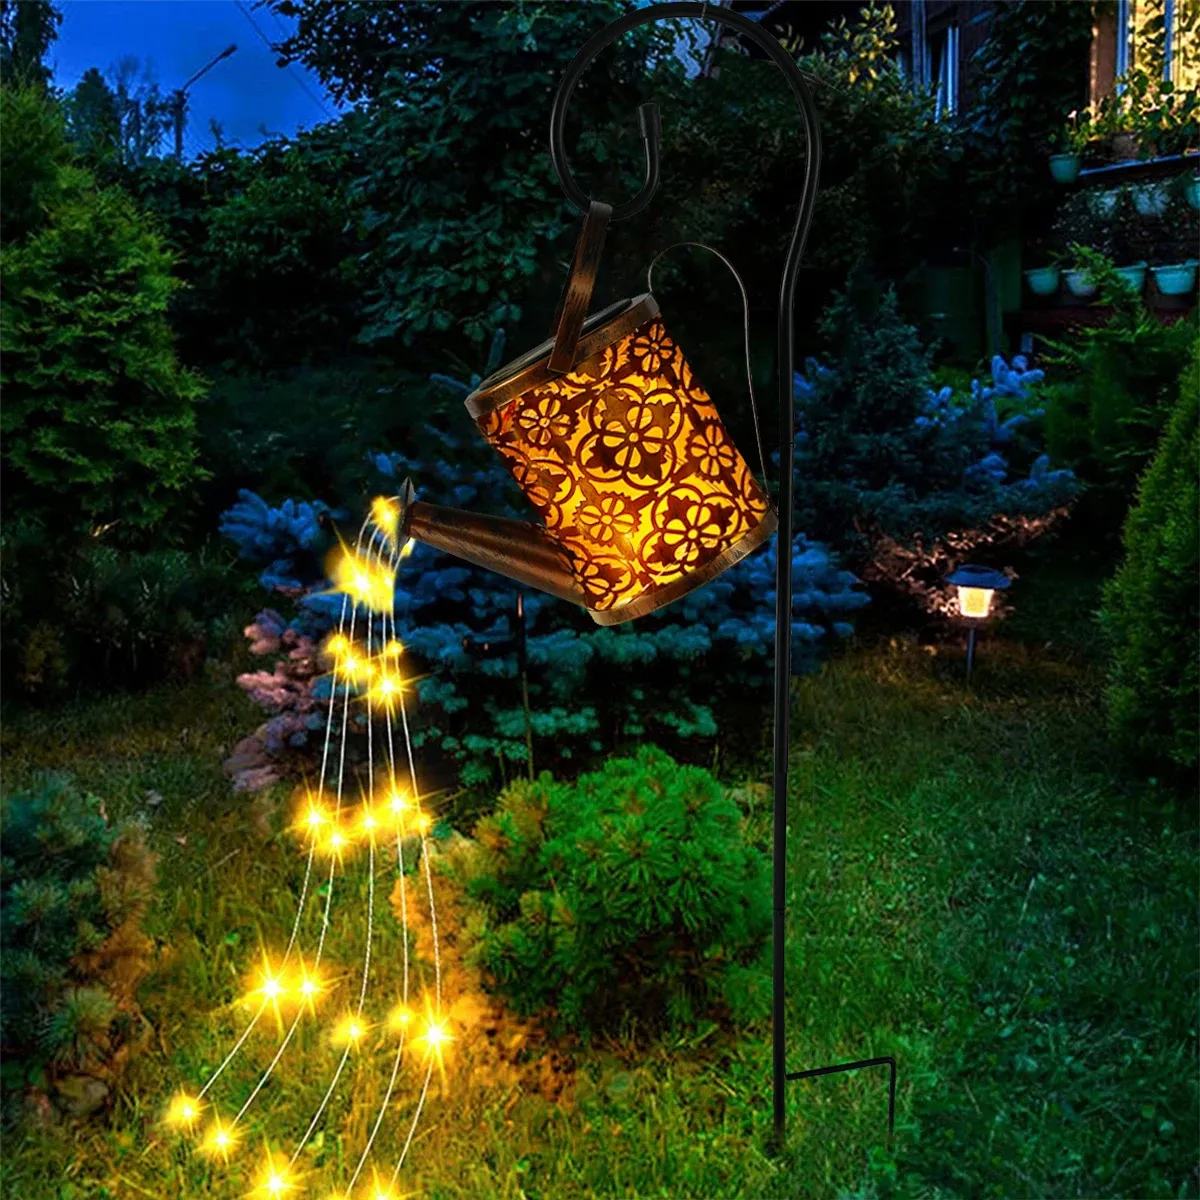 Decoraties Solar Watering Kan Retro metaal 36led Kettle String Lights waterdichte hangende zonne -lantaarns Lampen buitentuindecoratie